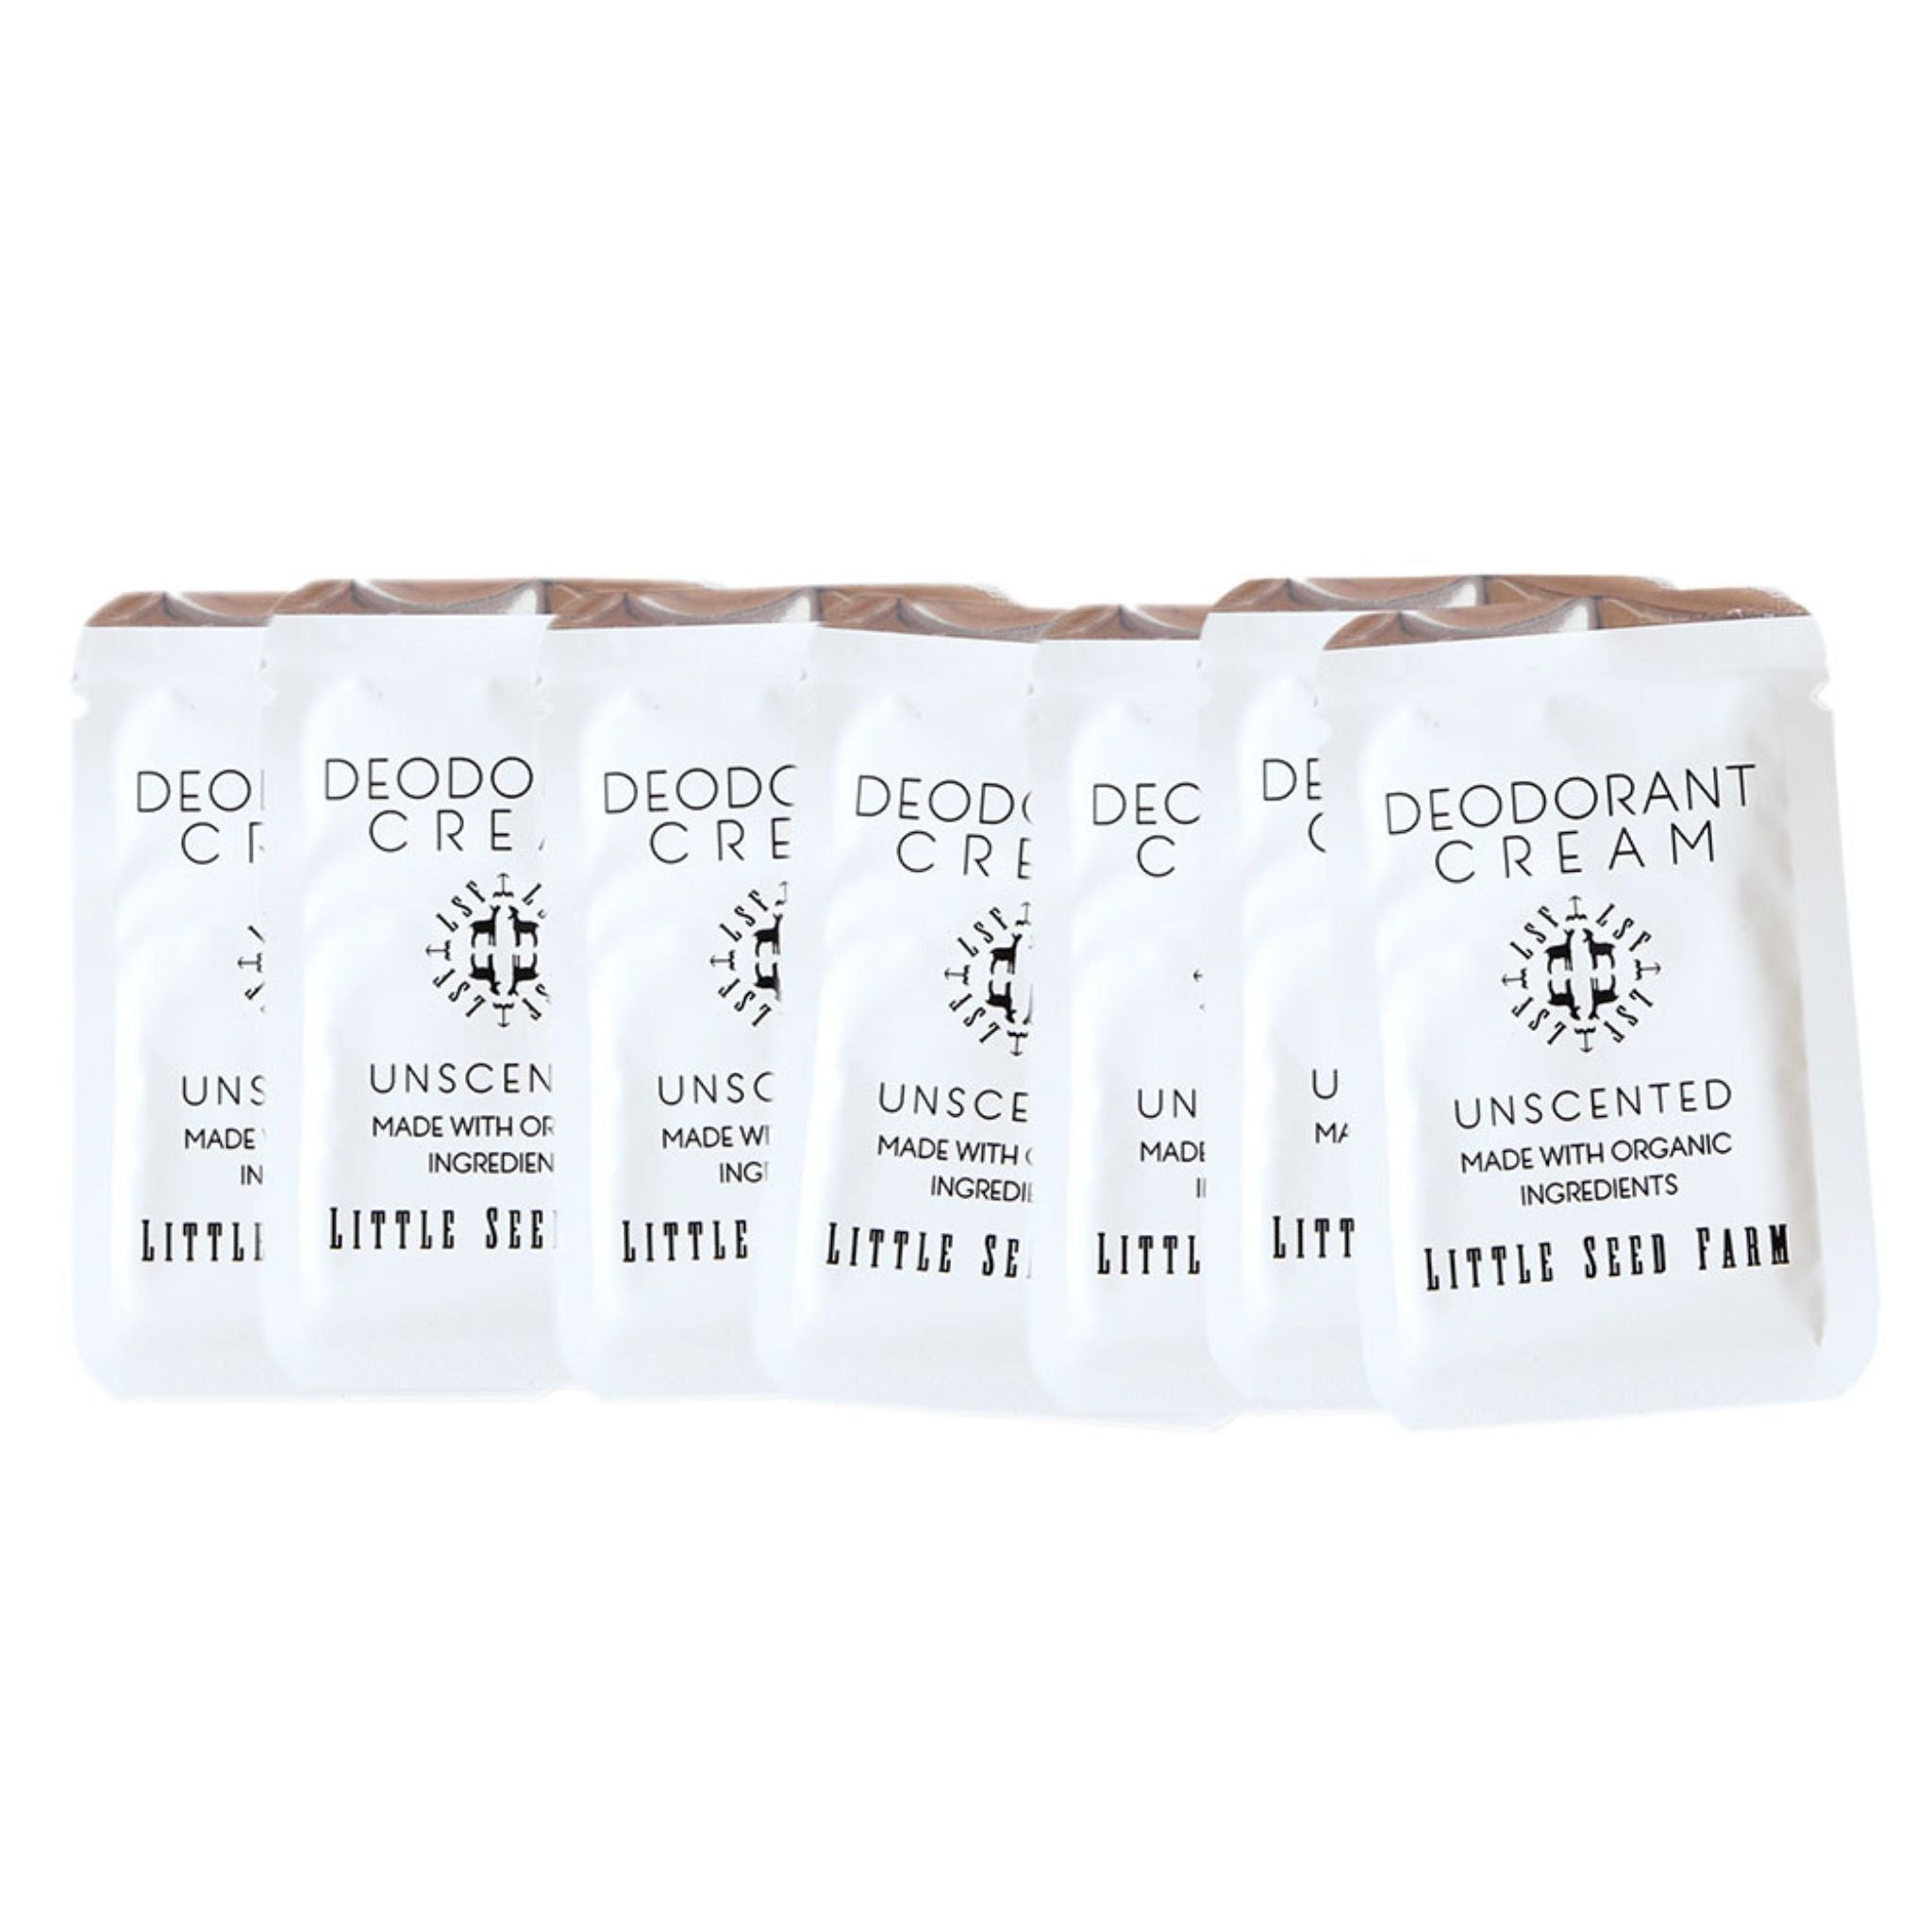 Travel Pack - Nine Organic Deodorant Cream Pouches